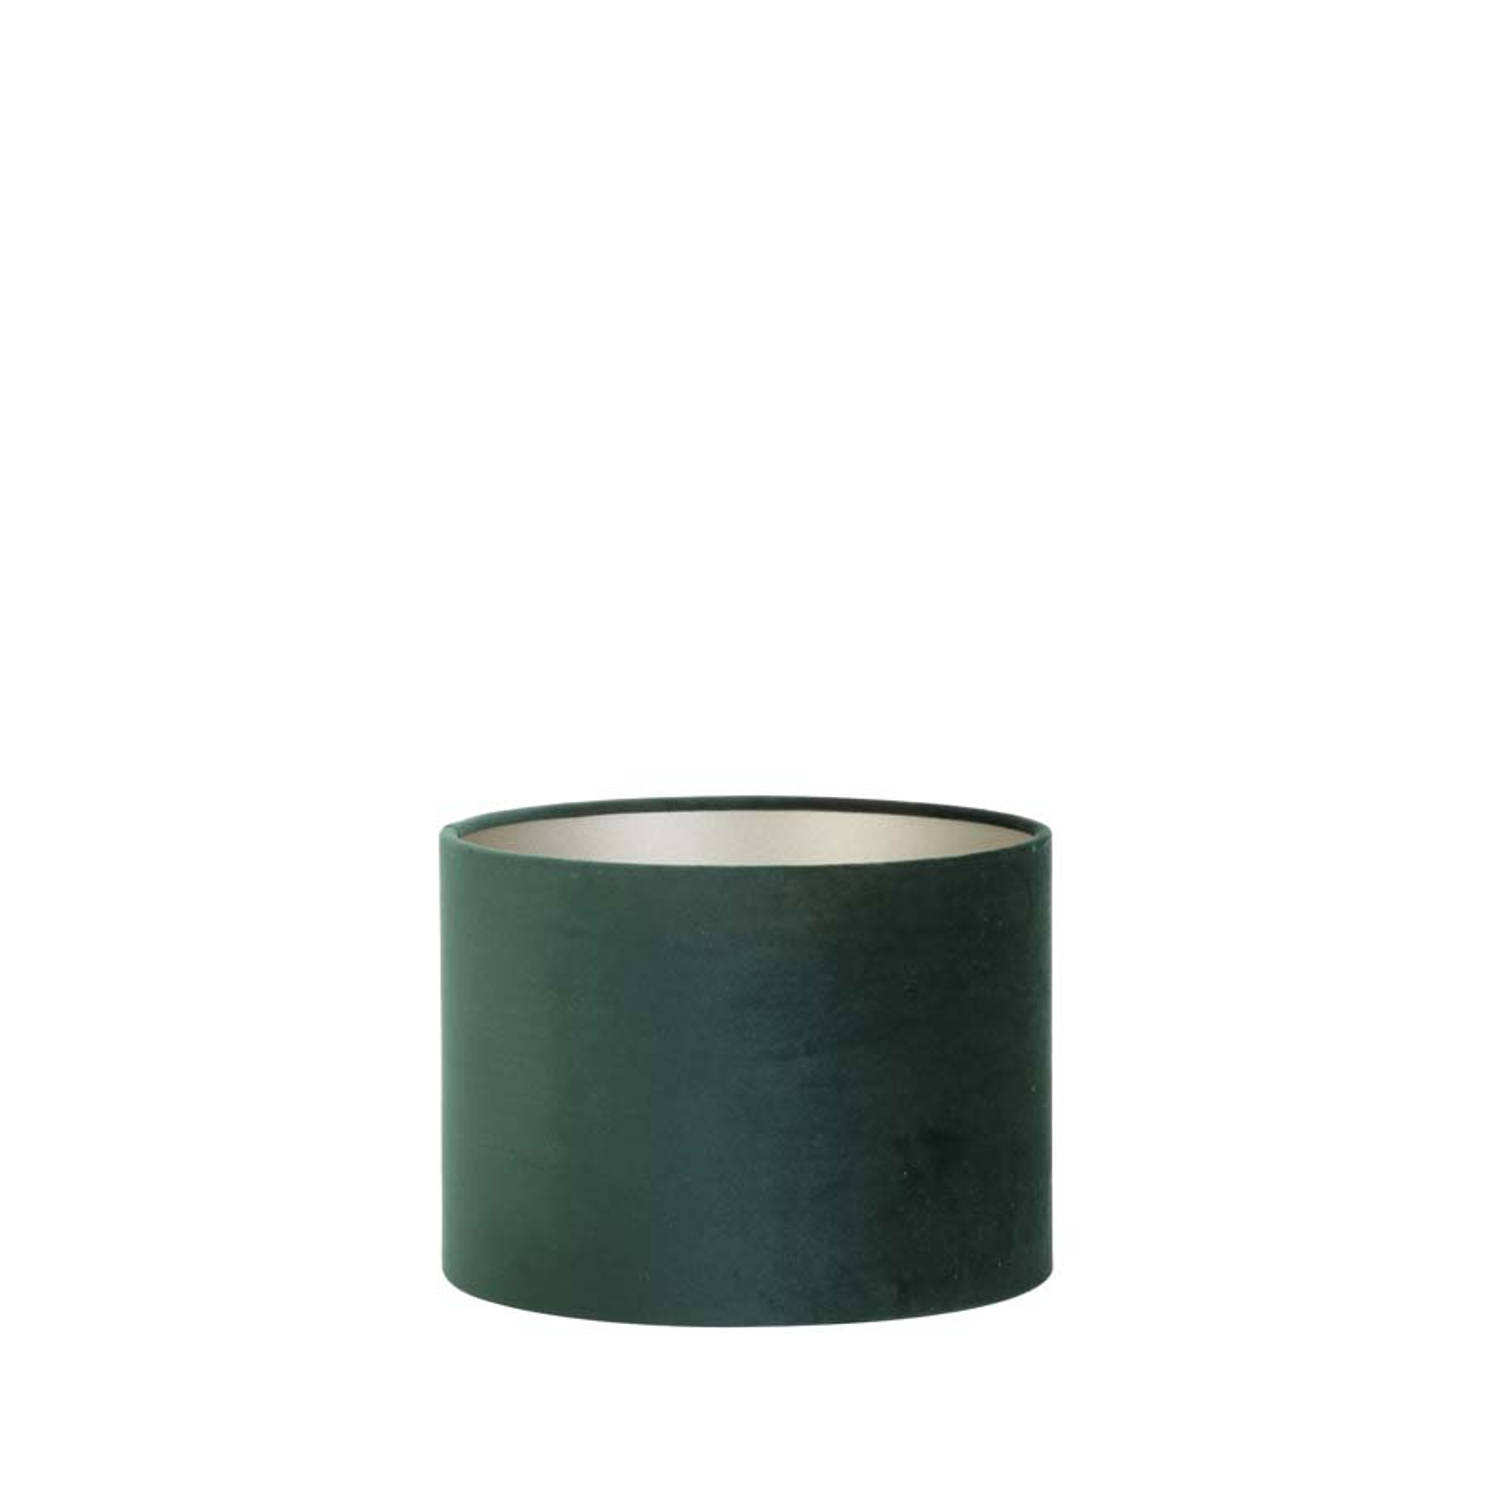 Kap cilinder 30-30-21 cm VELOURS dutch green Light & Living